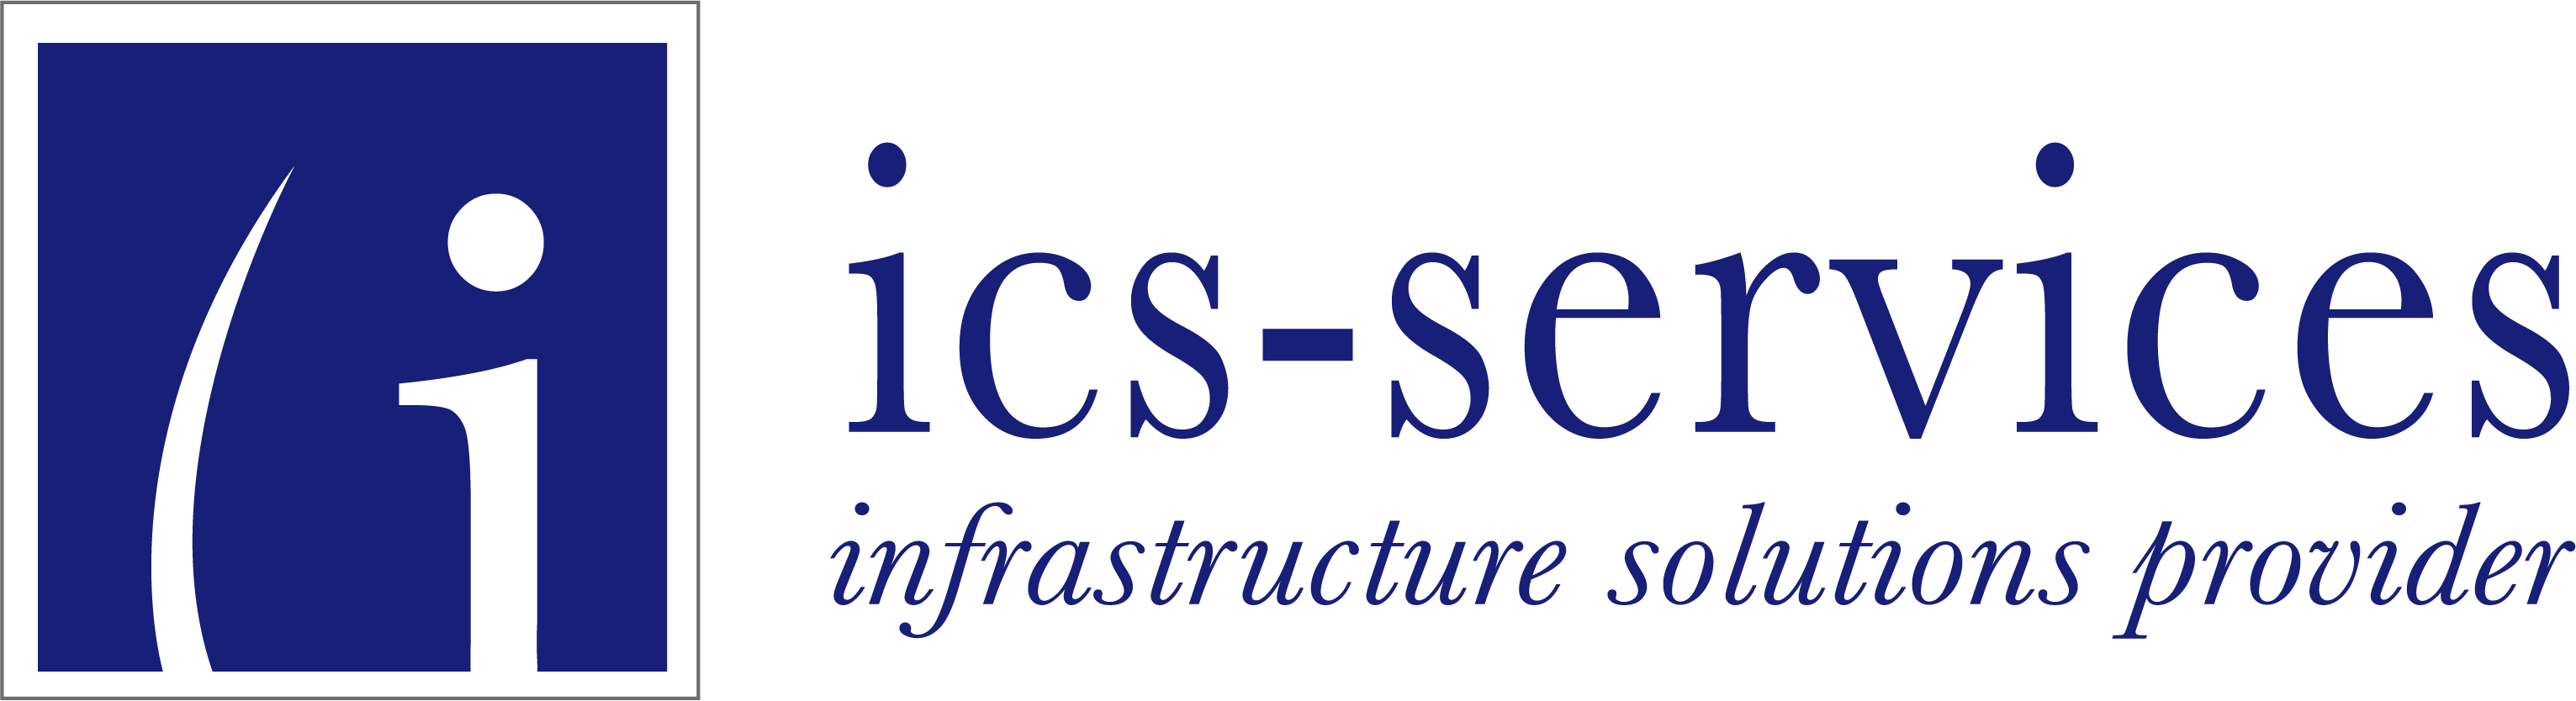 ics-services-logo